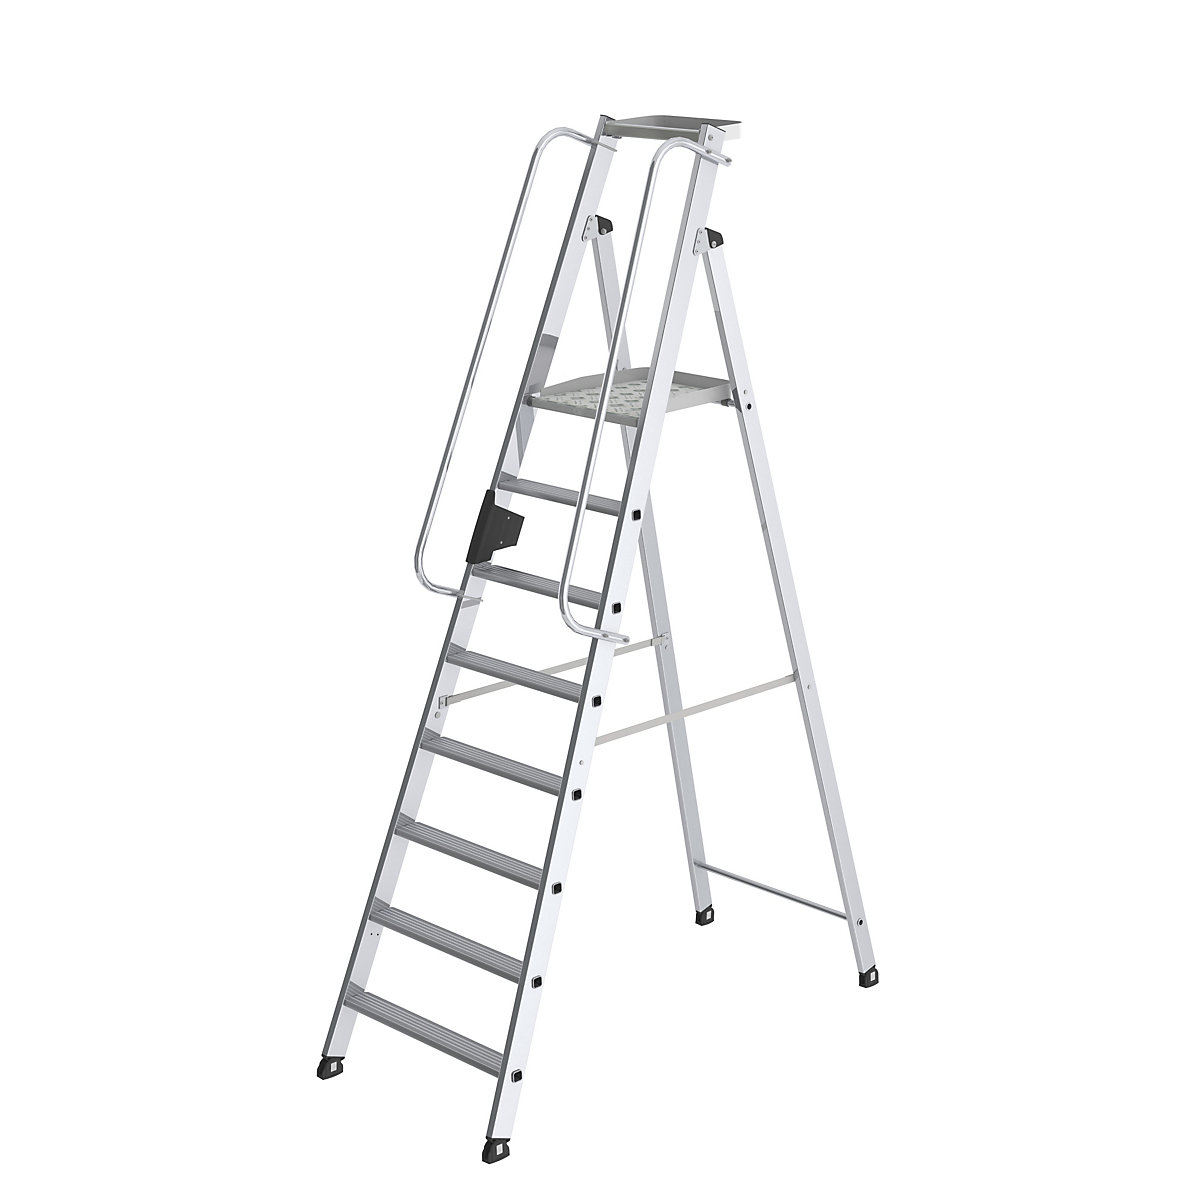 Aluminium step ladder with large platform – MUNK, hand rail on both sides, 8 steps inclusive platforms